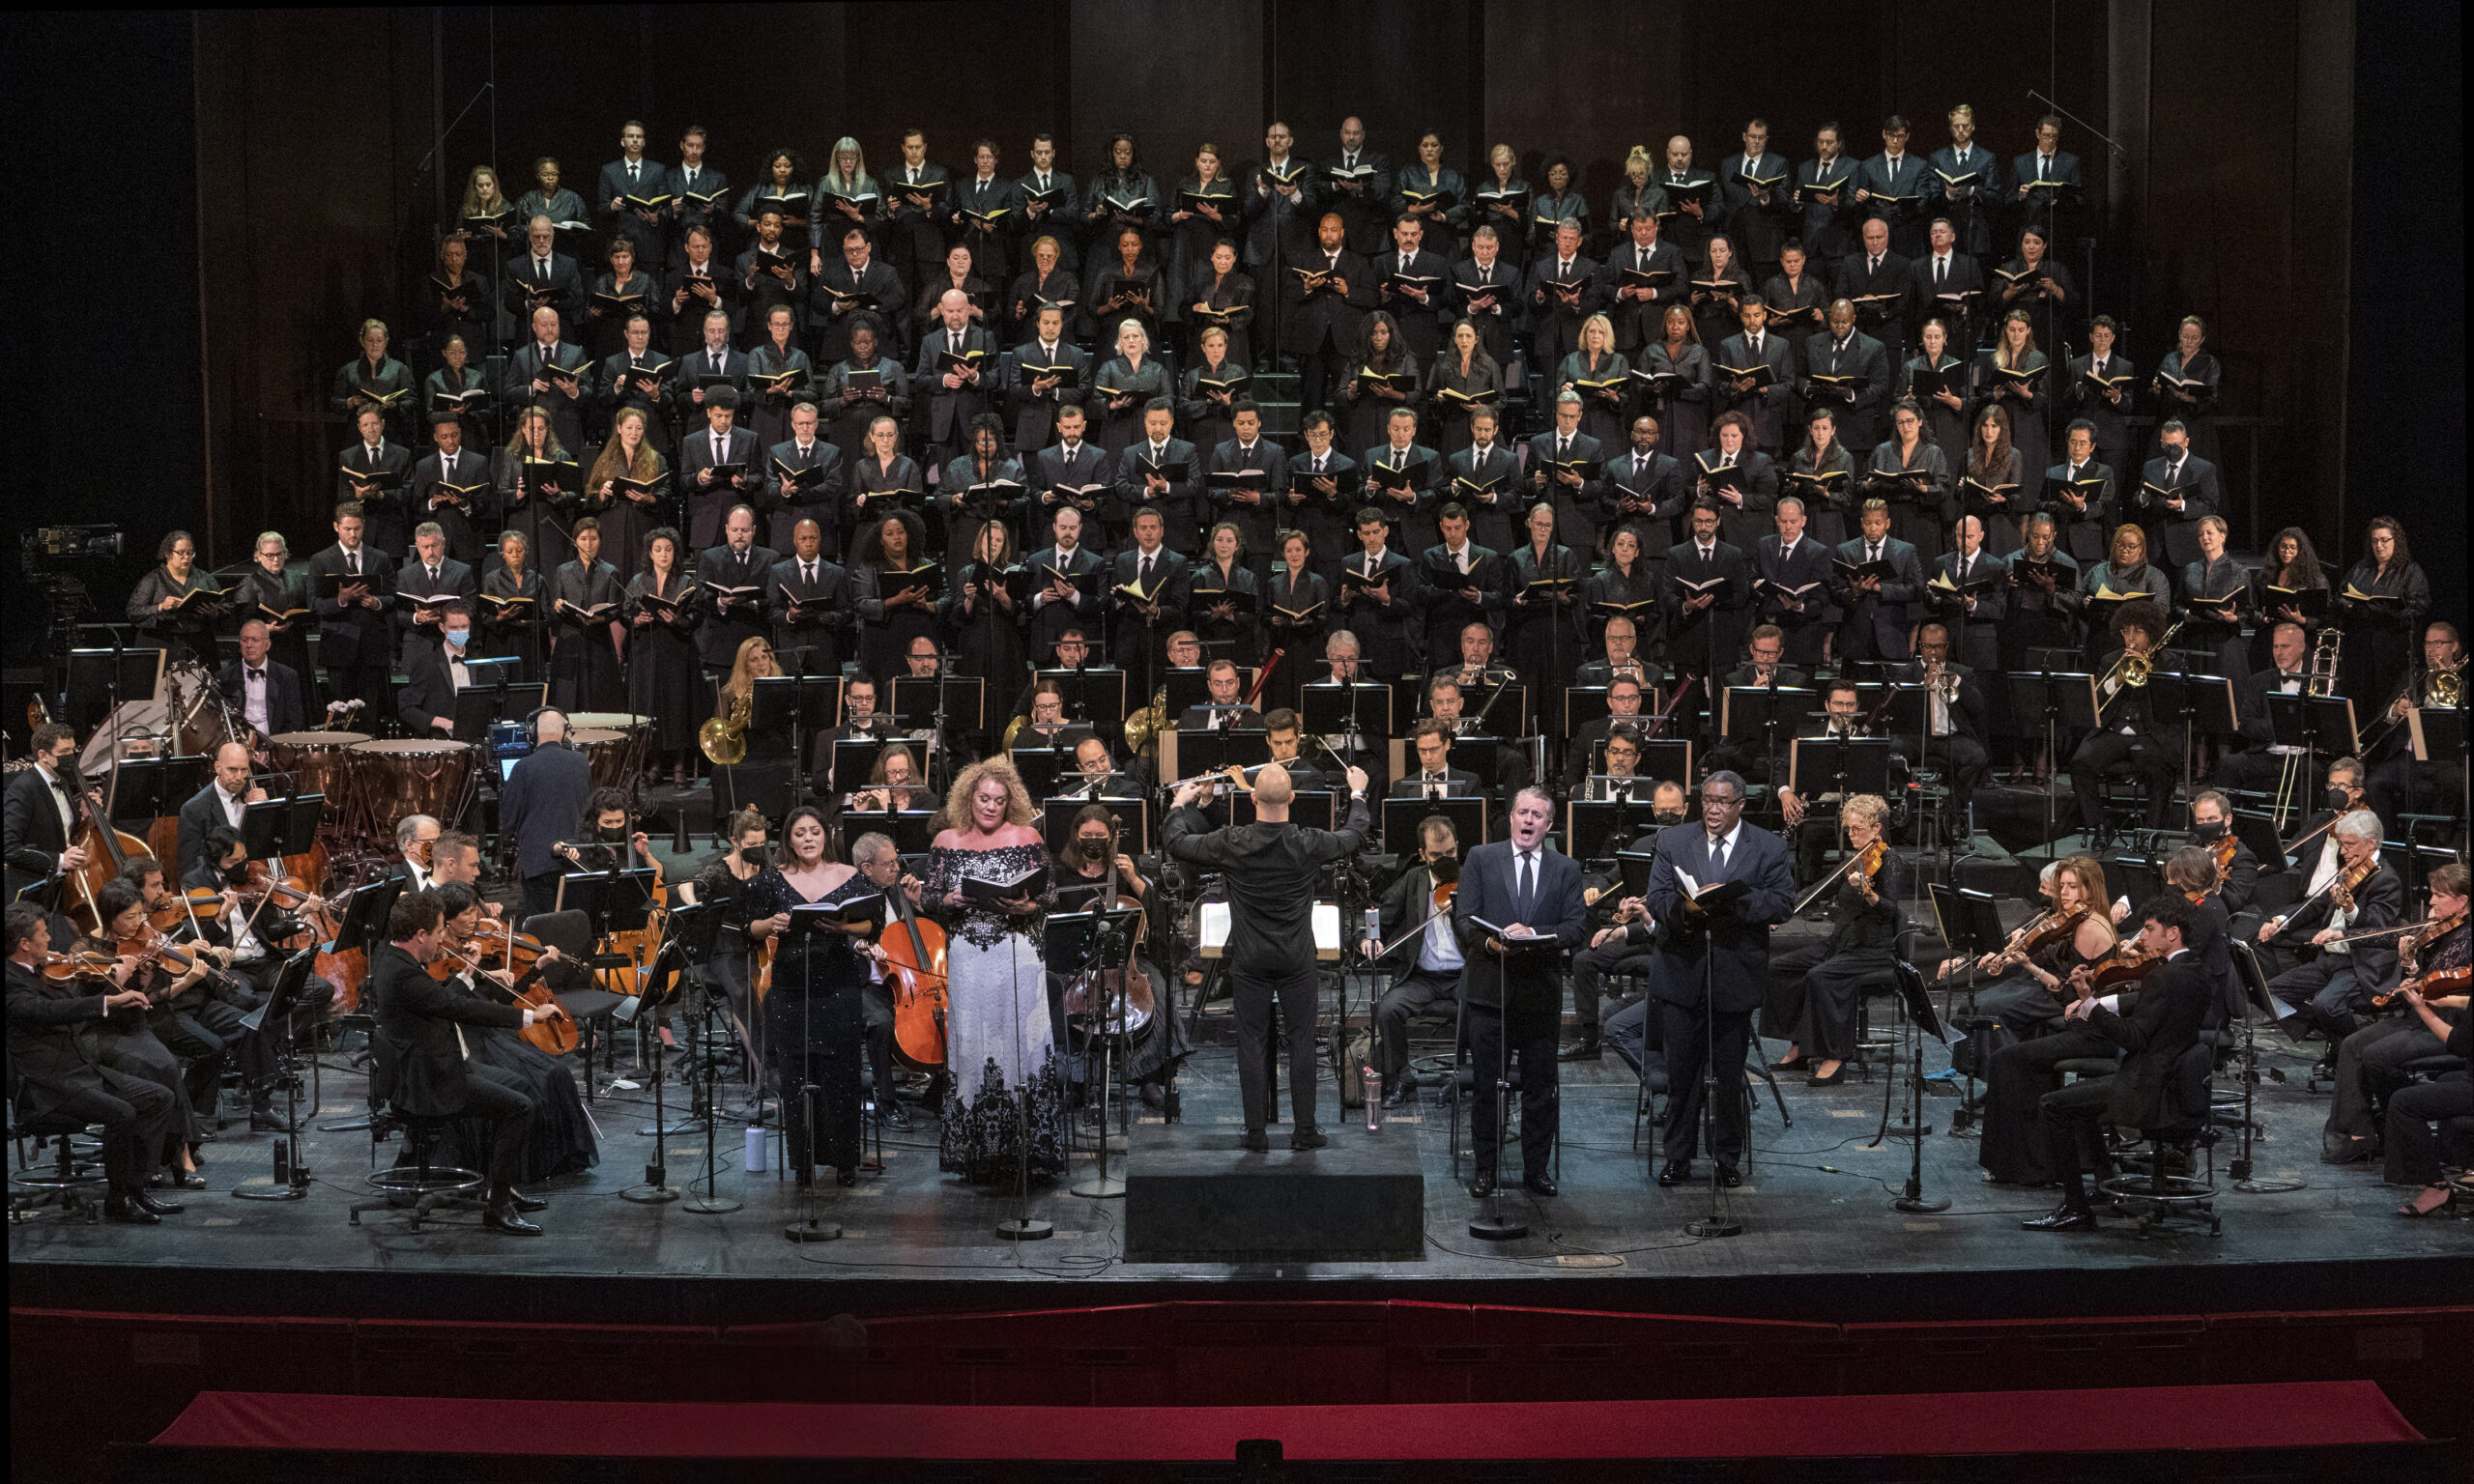 MetropolitanOperaOrchestra and Choir